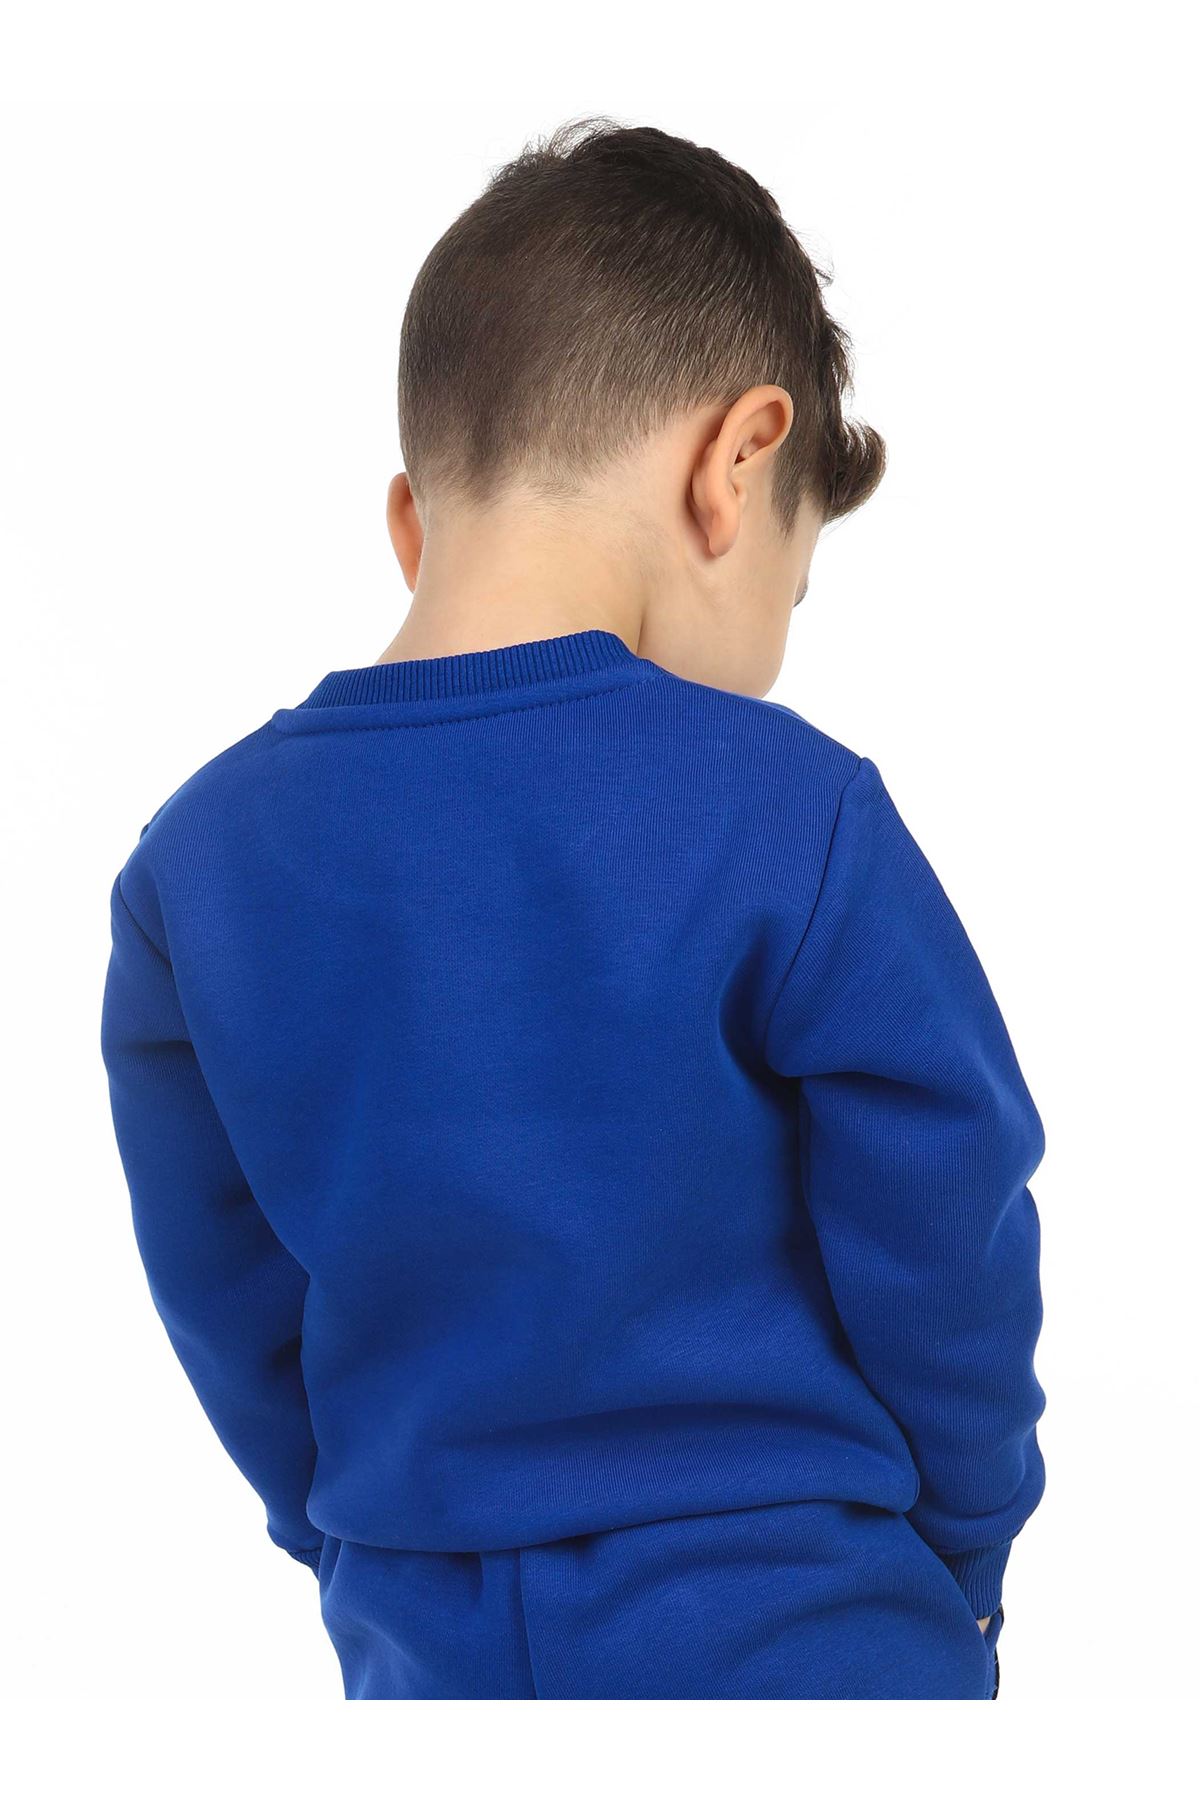 Sax Winterisation Male Child Sweatshirt